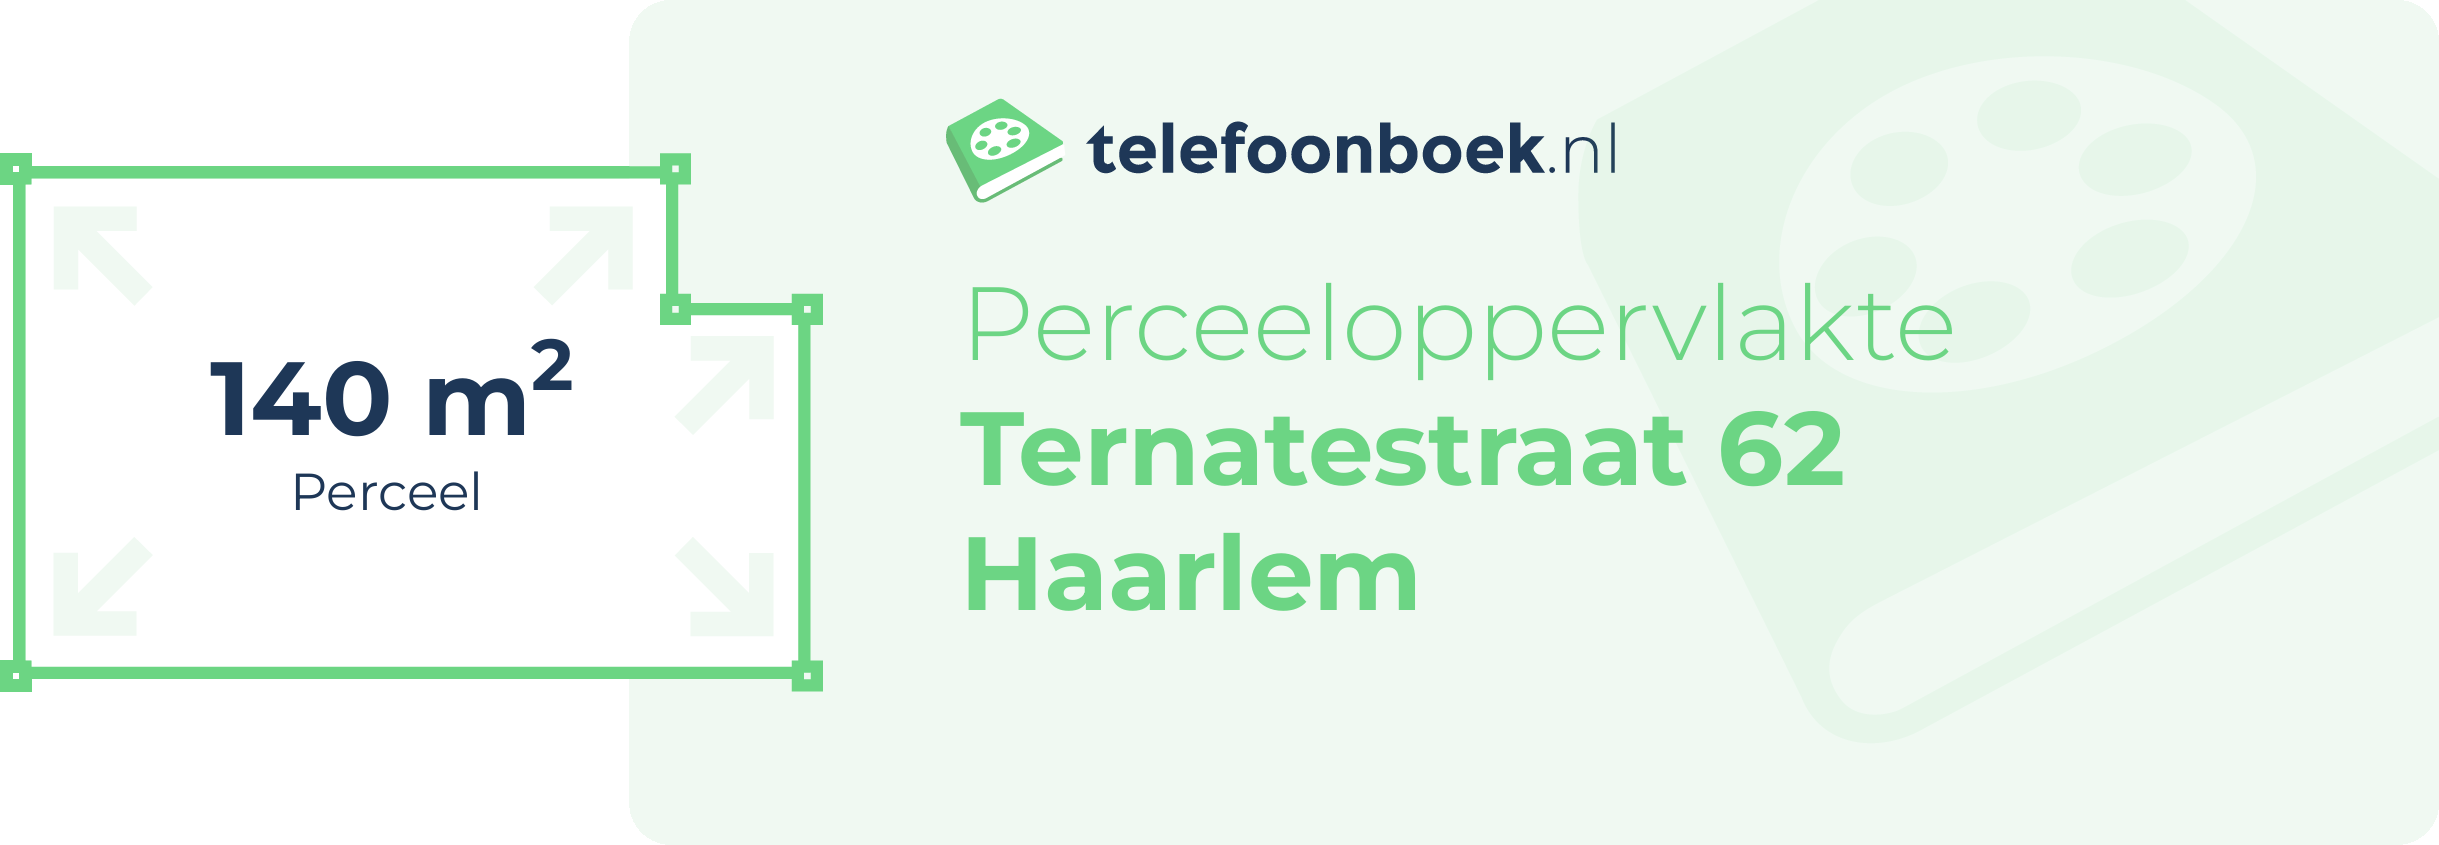 Perceeloppervlakte Ternatestraat 62 Haarlem